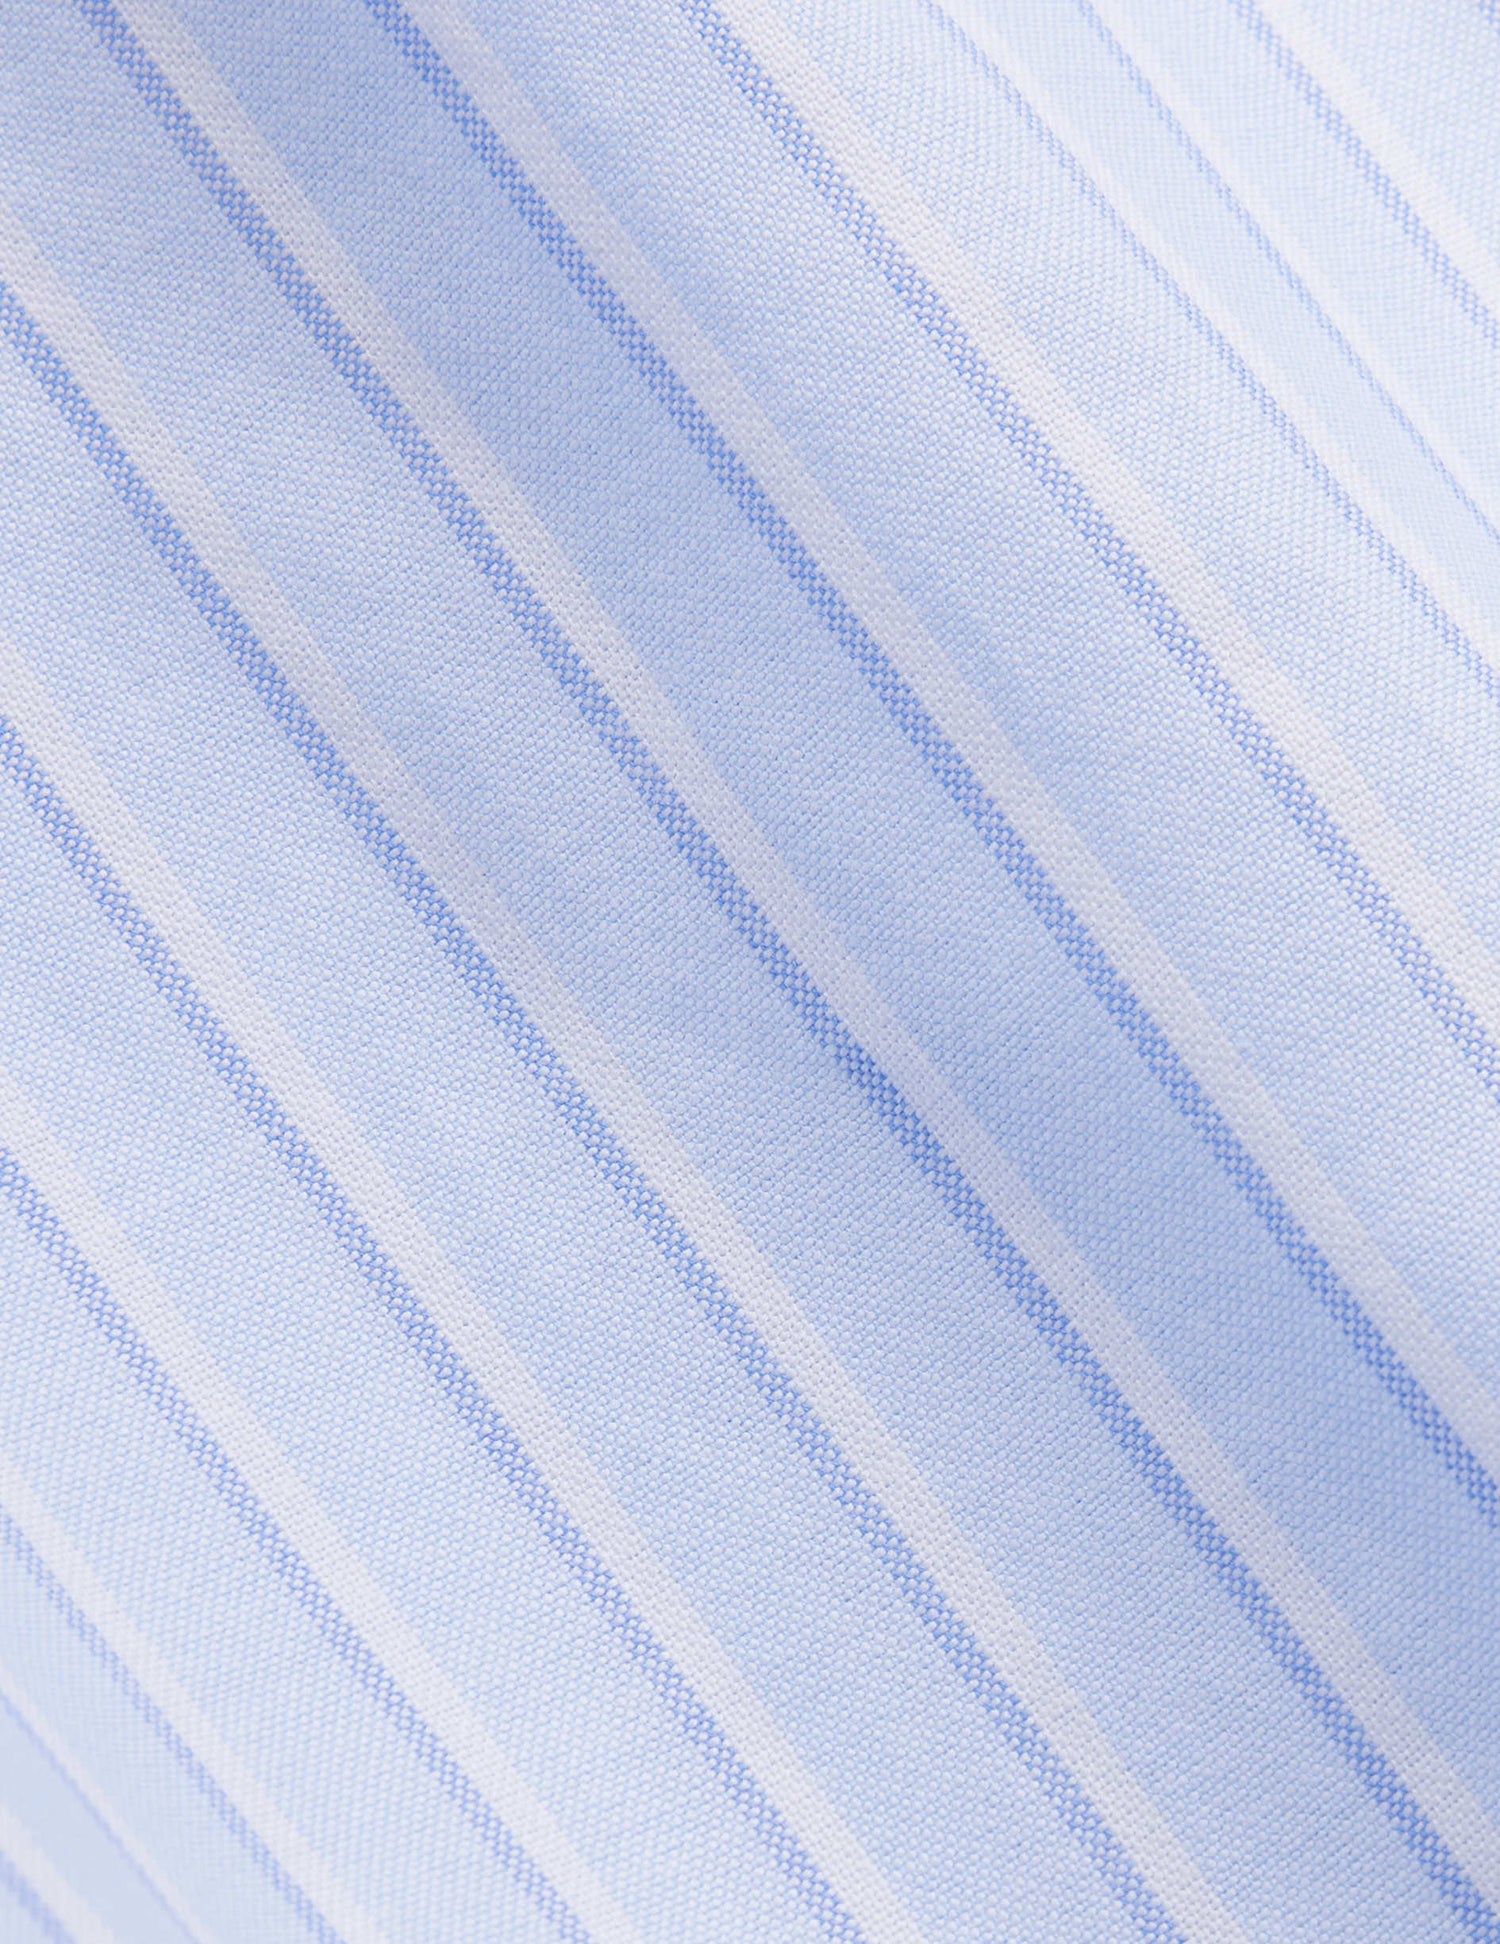 Striped light blue Carl shirt - Oxford - Open Straight Collar#5